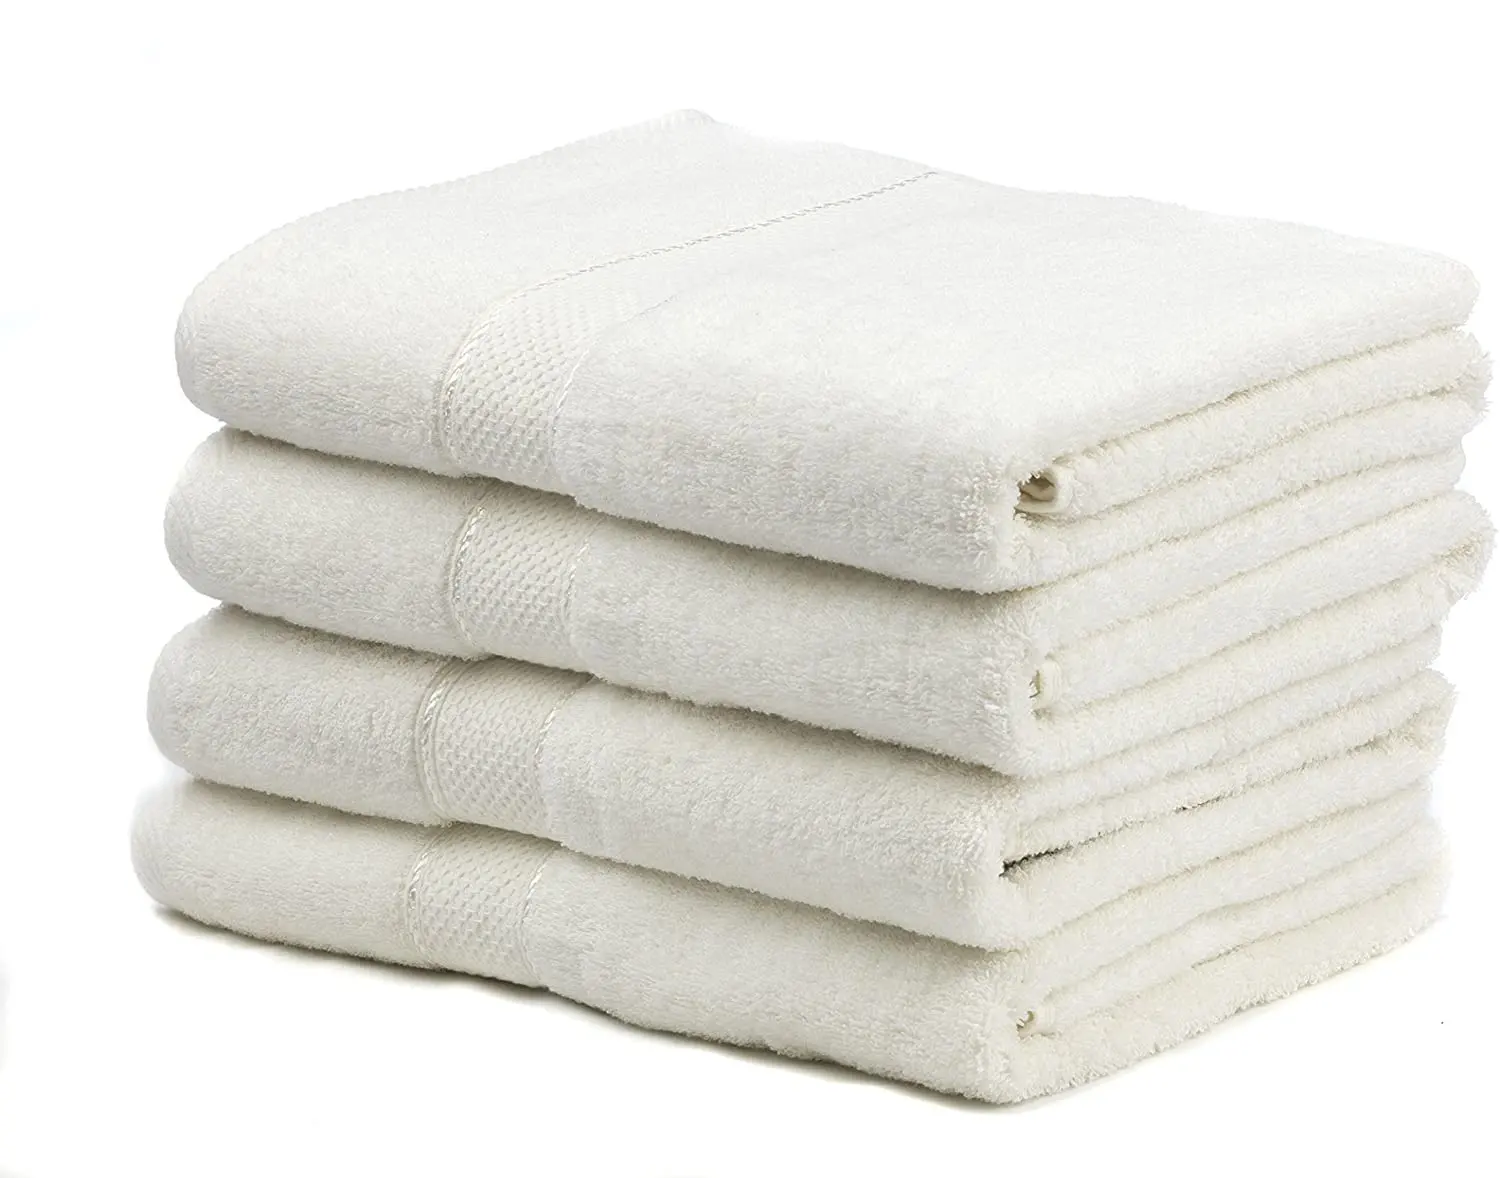 Полотенце распродажа. Полотенце Bamboo Premium. Хлопковое полотенце. Bamboo Cotton. Bamboo Towel Agena.